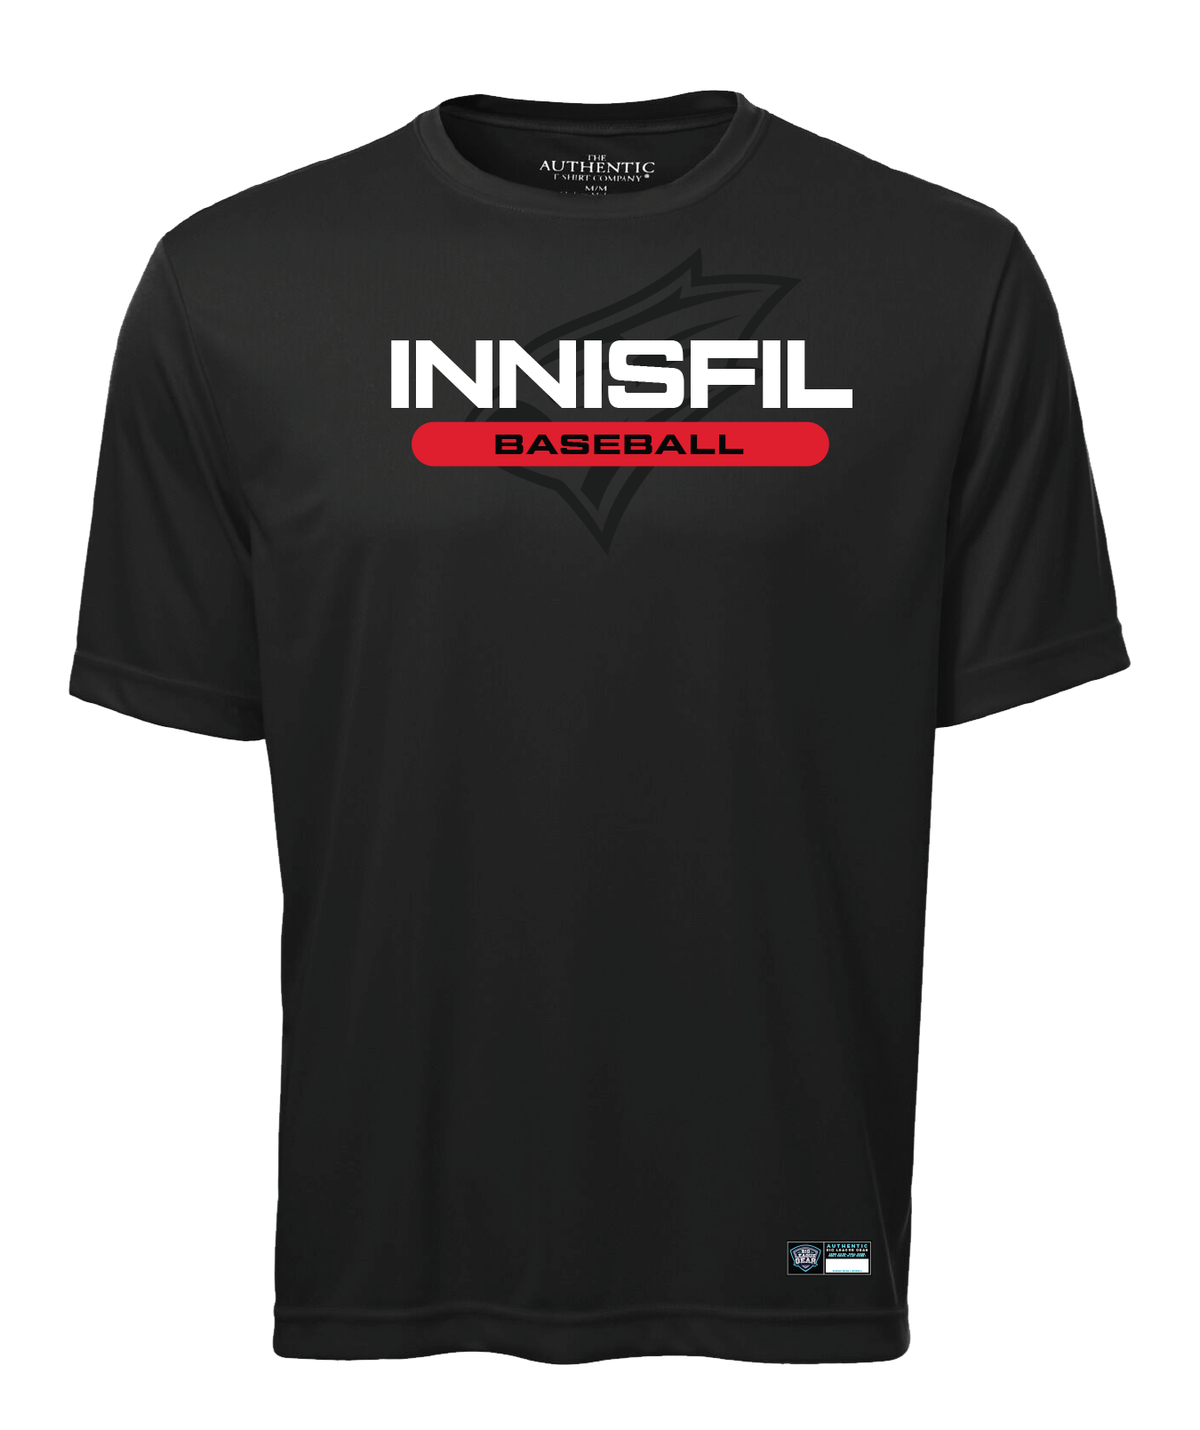 Innisfil Cardinals "Hometown" T-Shirt - Black